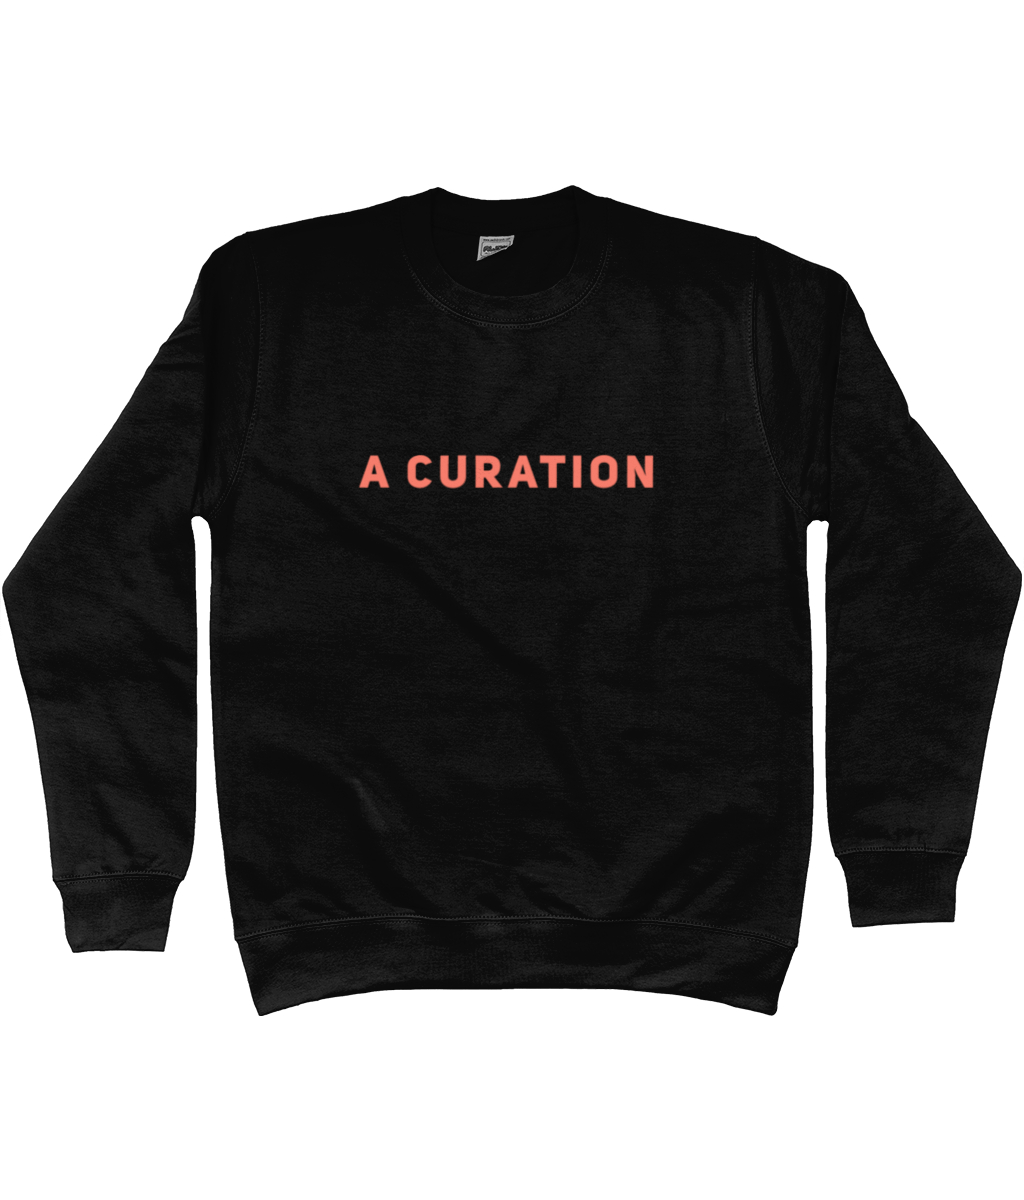 A CURATION Sweatshirt